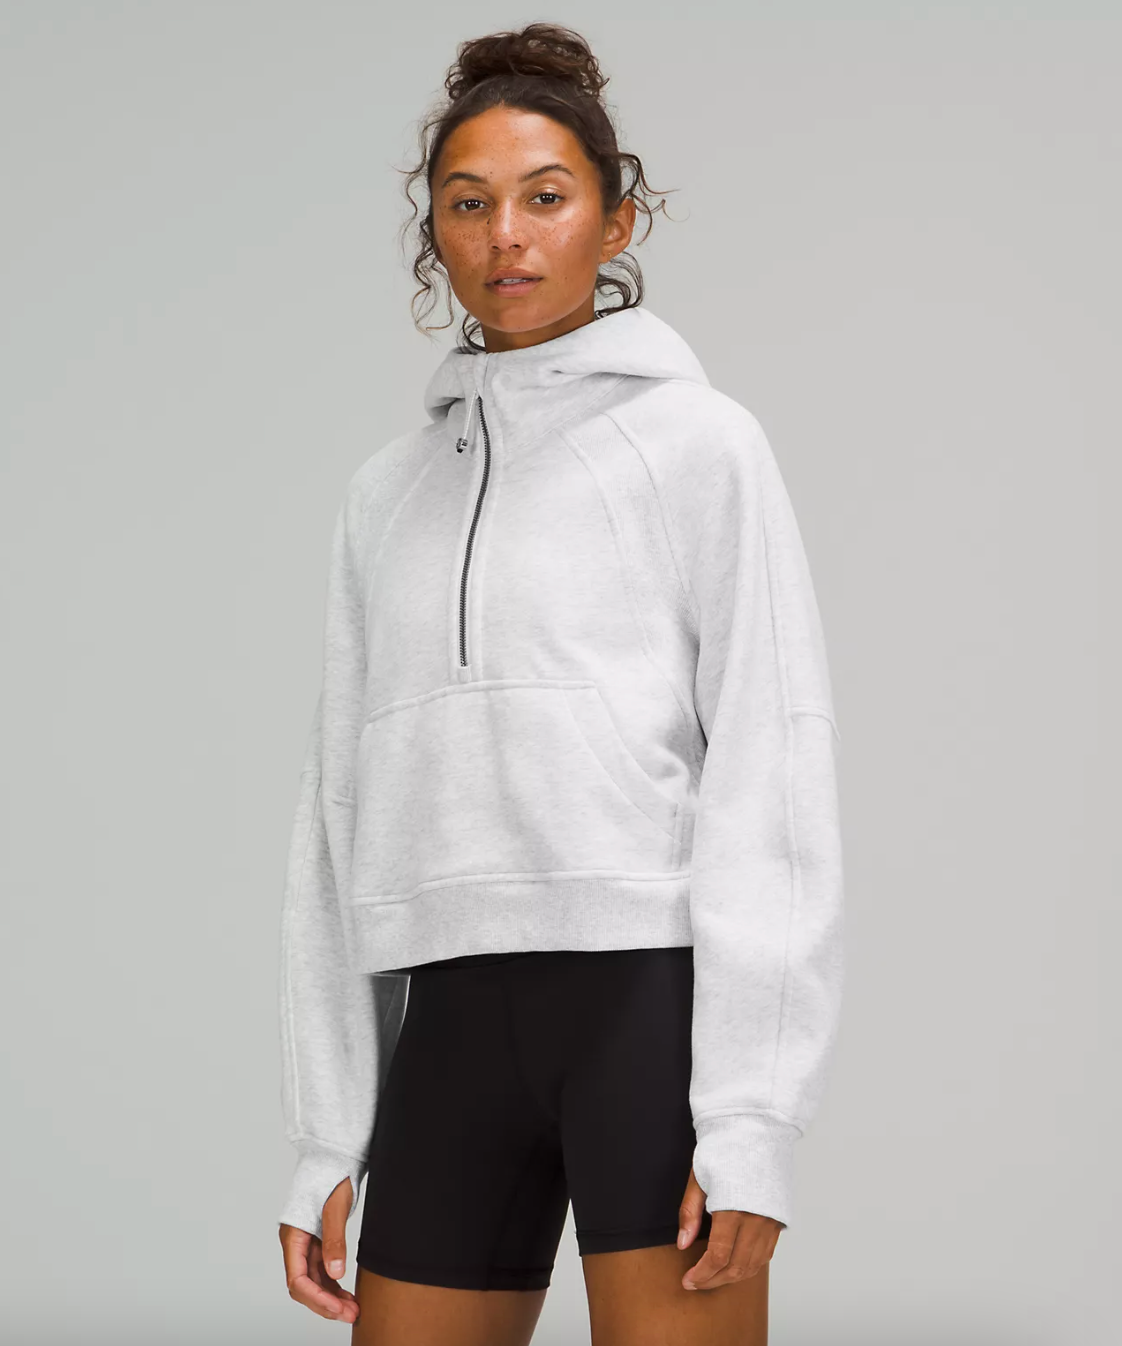 model wearing the hoodie in light grey